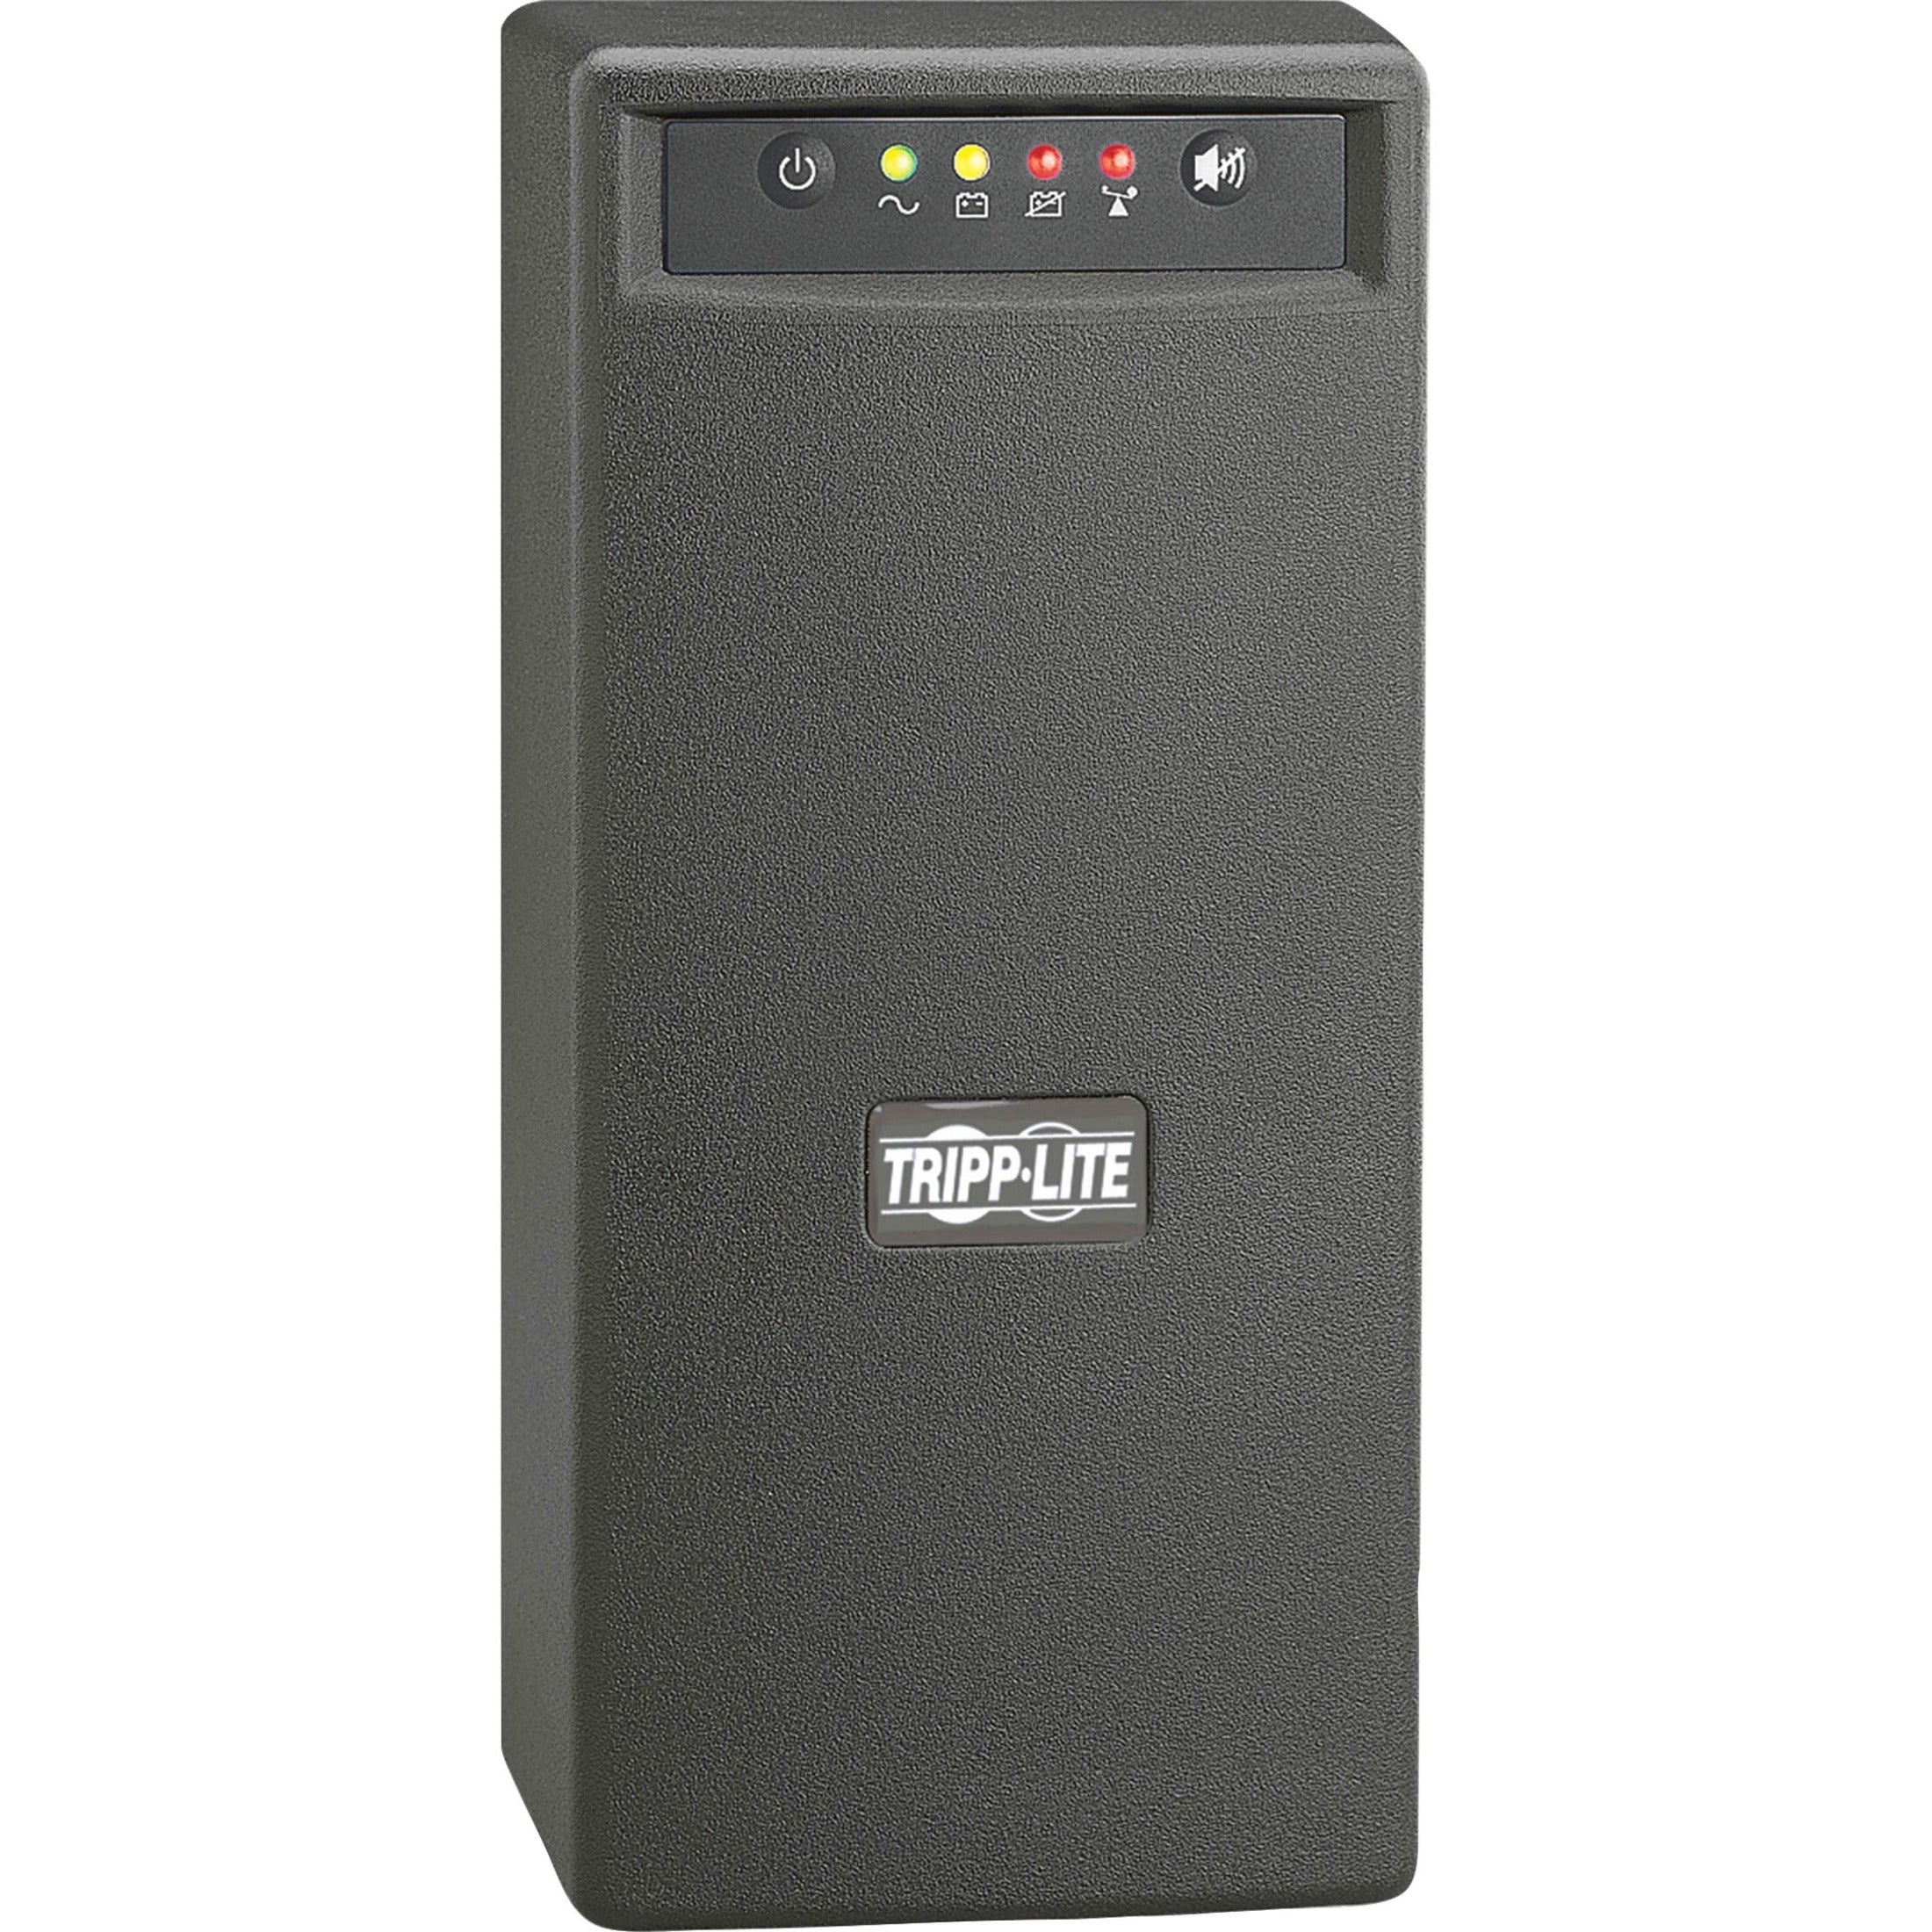 Tripp Lite OMNIVS1000 8-Outlet Line Interactive UPS System, 1000VA, 60Min Backup Time